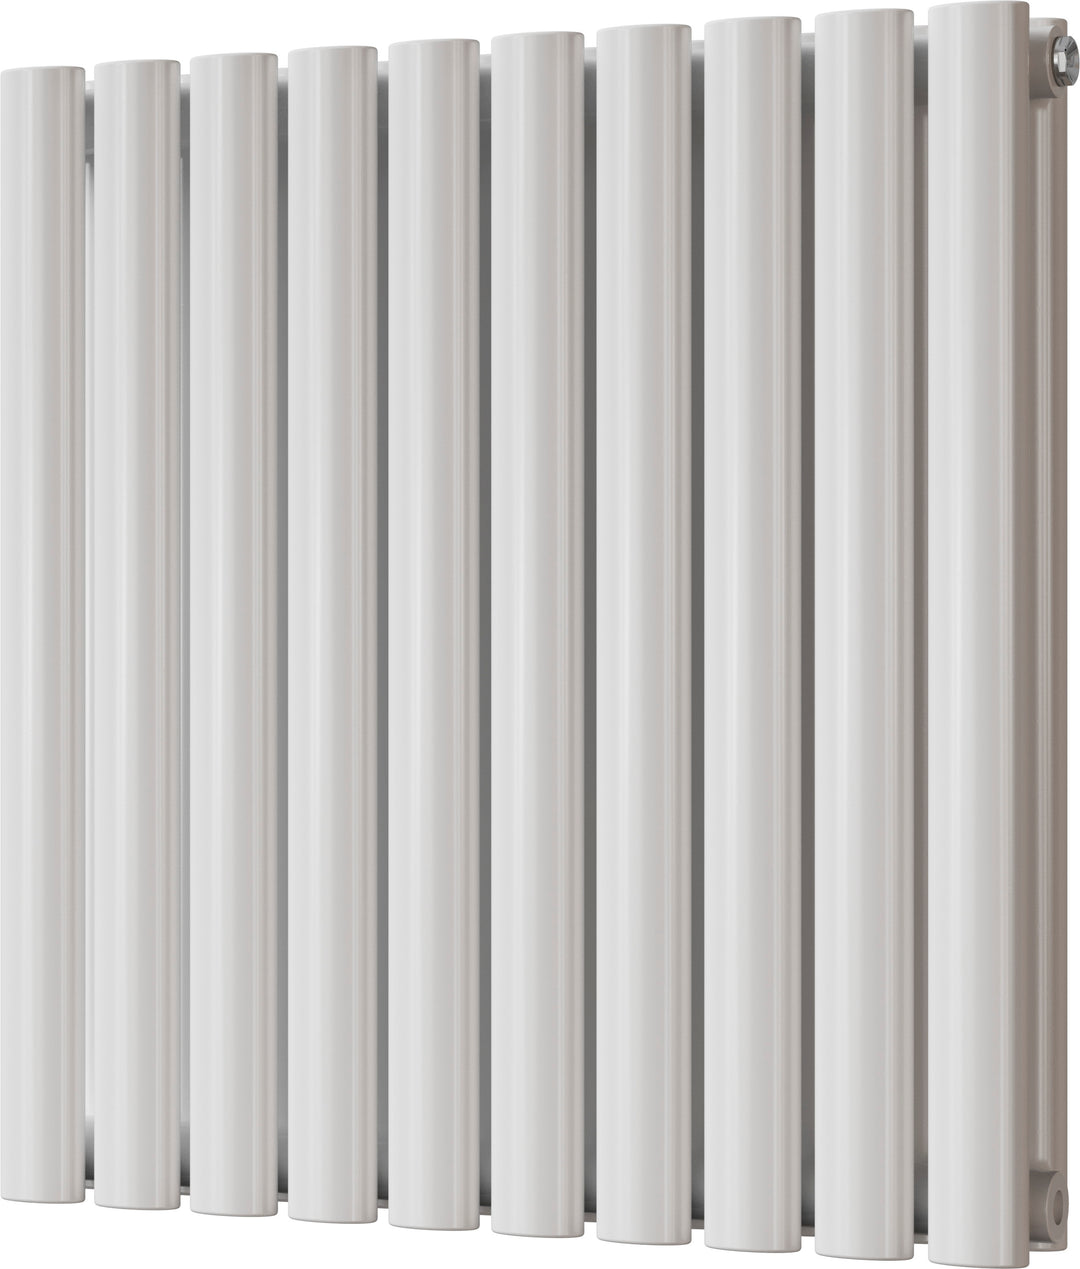 Omeara - White Horizontal Radiator H600mm x W580mm Double Panel